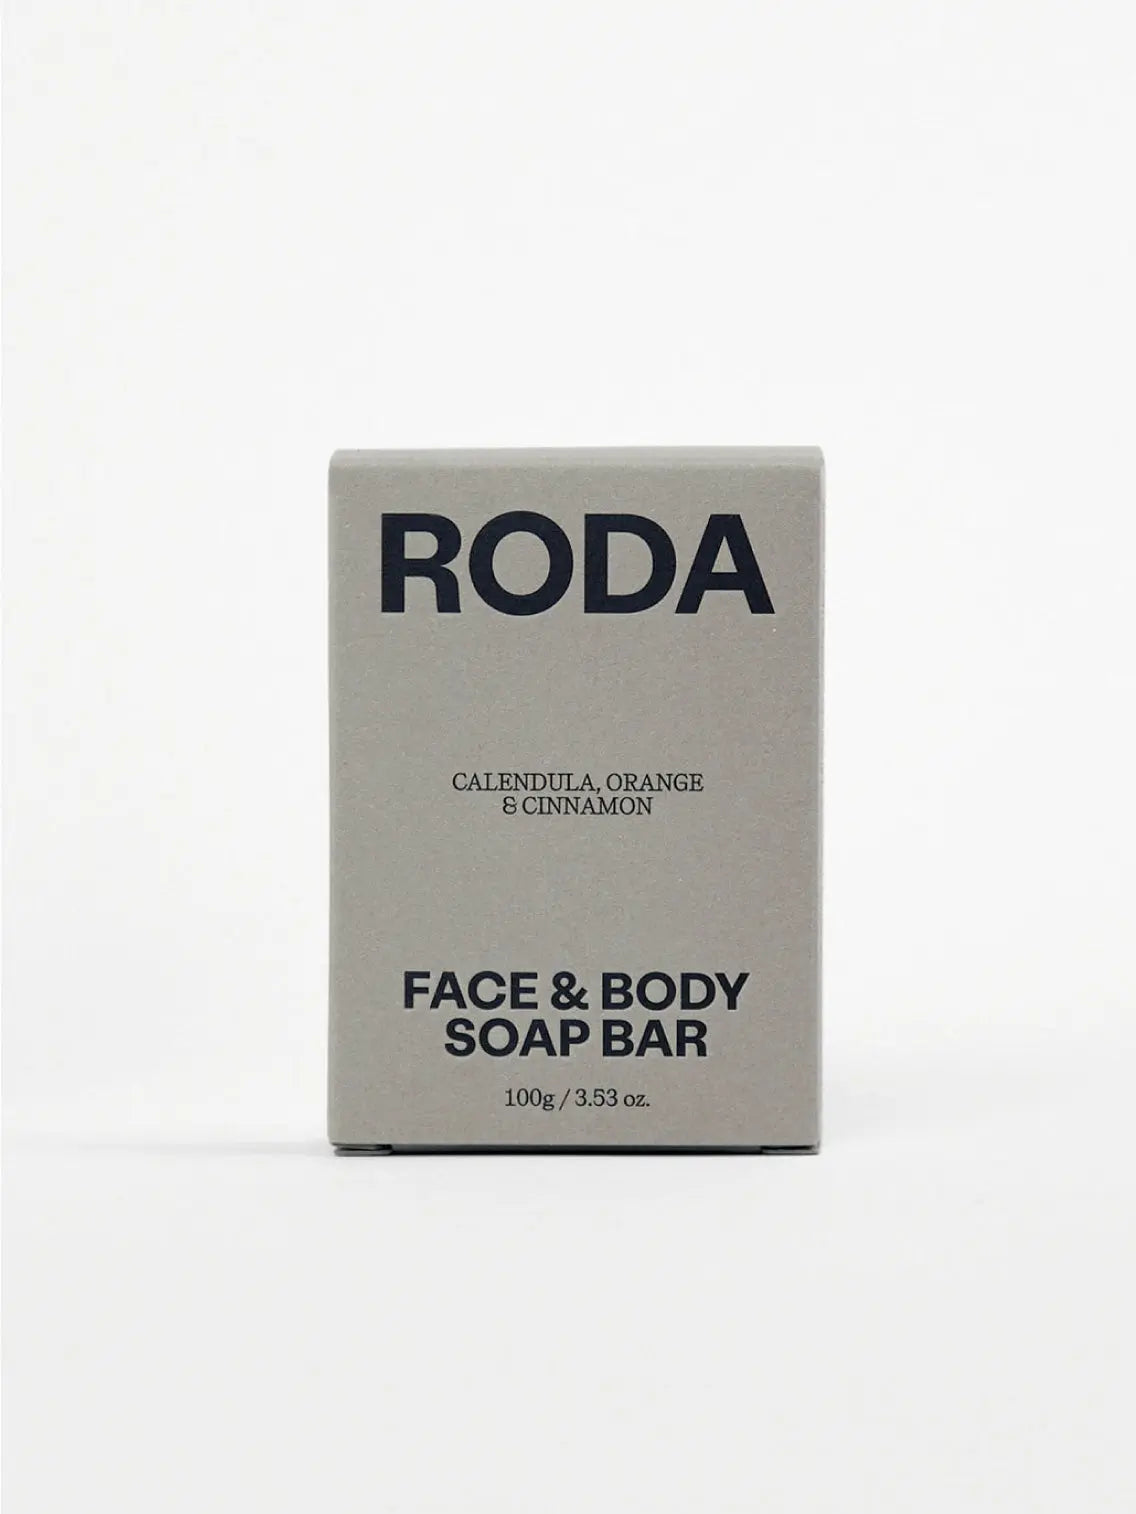 Face & Body Soap Bar - Calendula, Orange & Cinnamon Roda